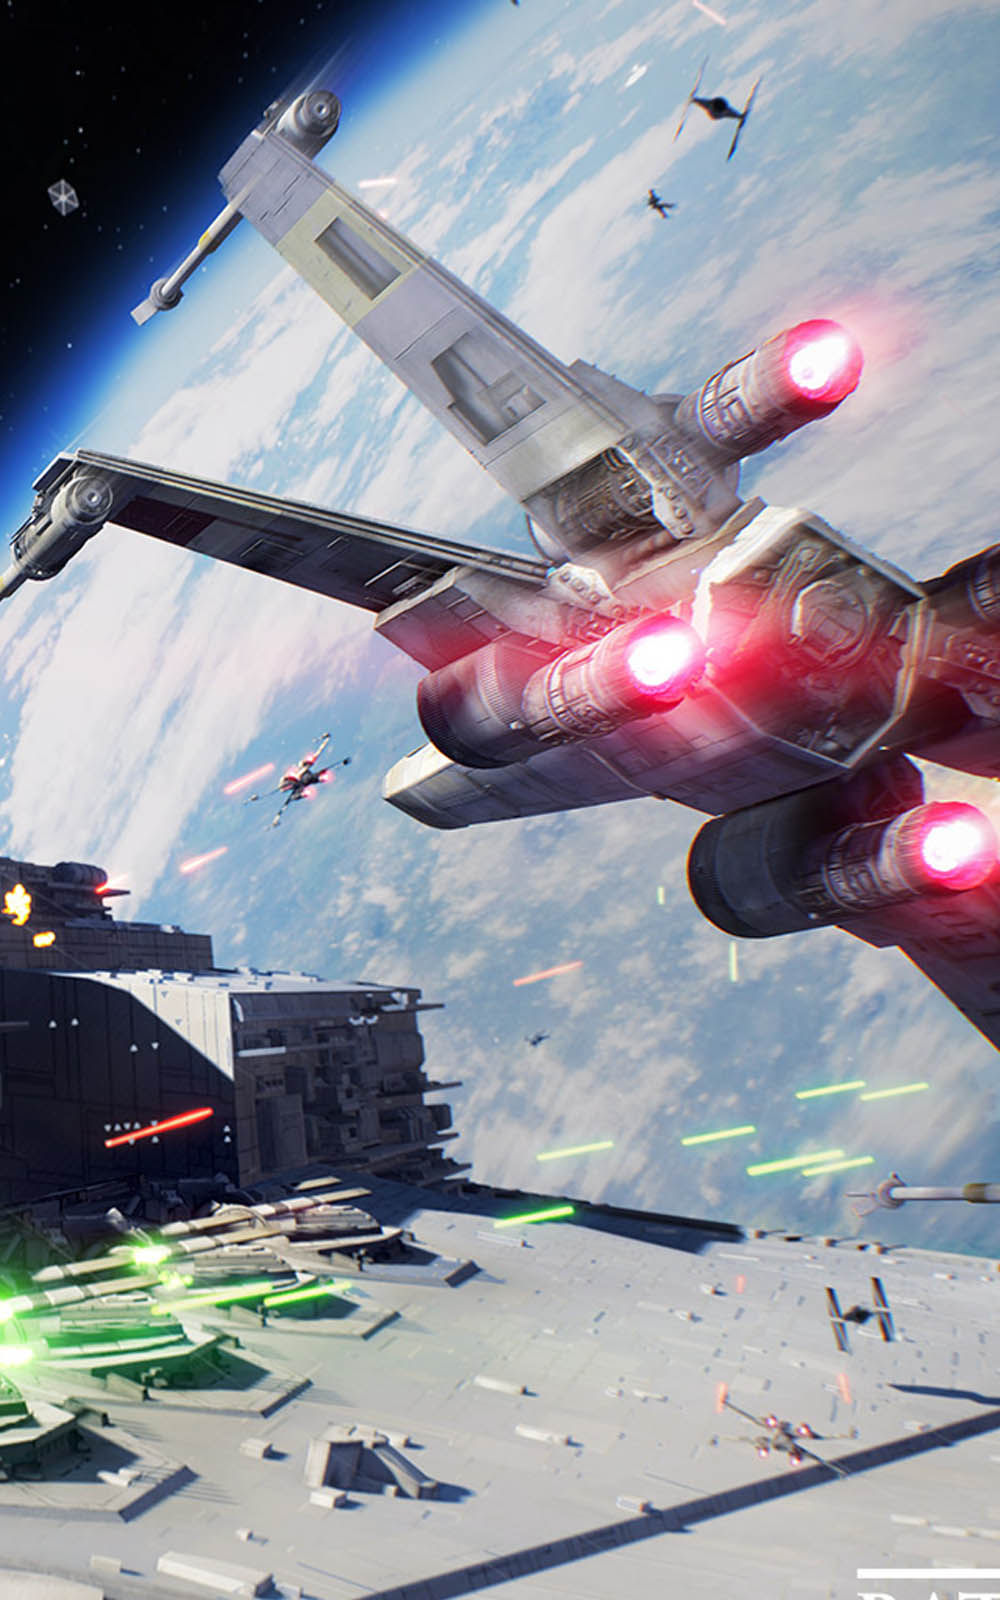 Spaceship Star Wars - Battlefront II 4K Ultra HD Mobile Wallpaper